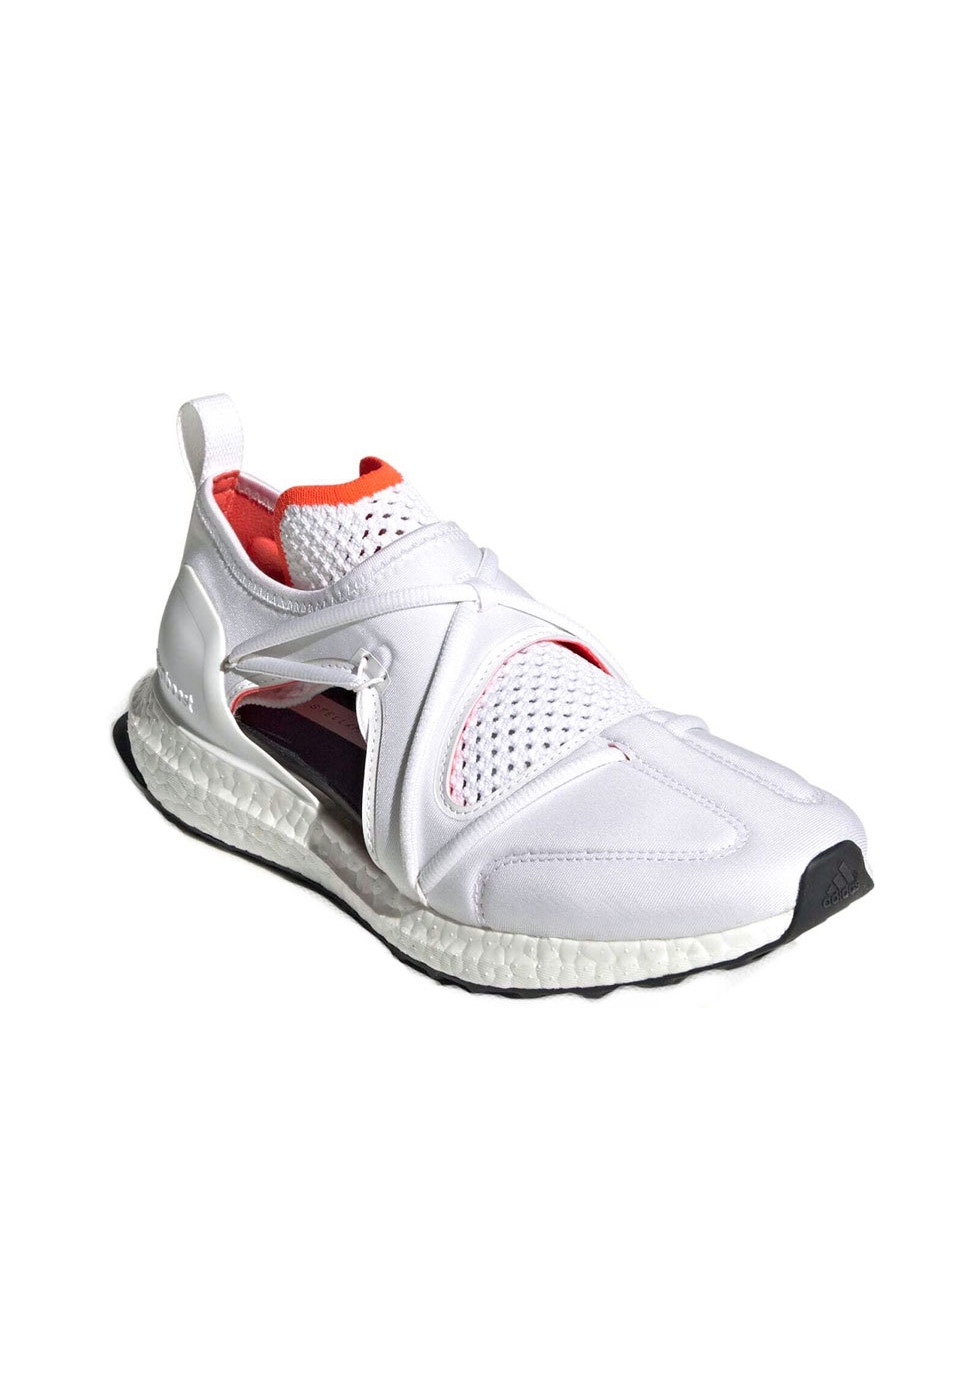 Adidas by Stella McCartney Women's laser cut sneakers shoes white tech ...